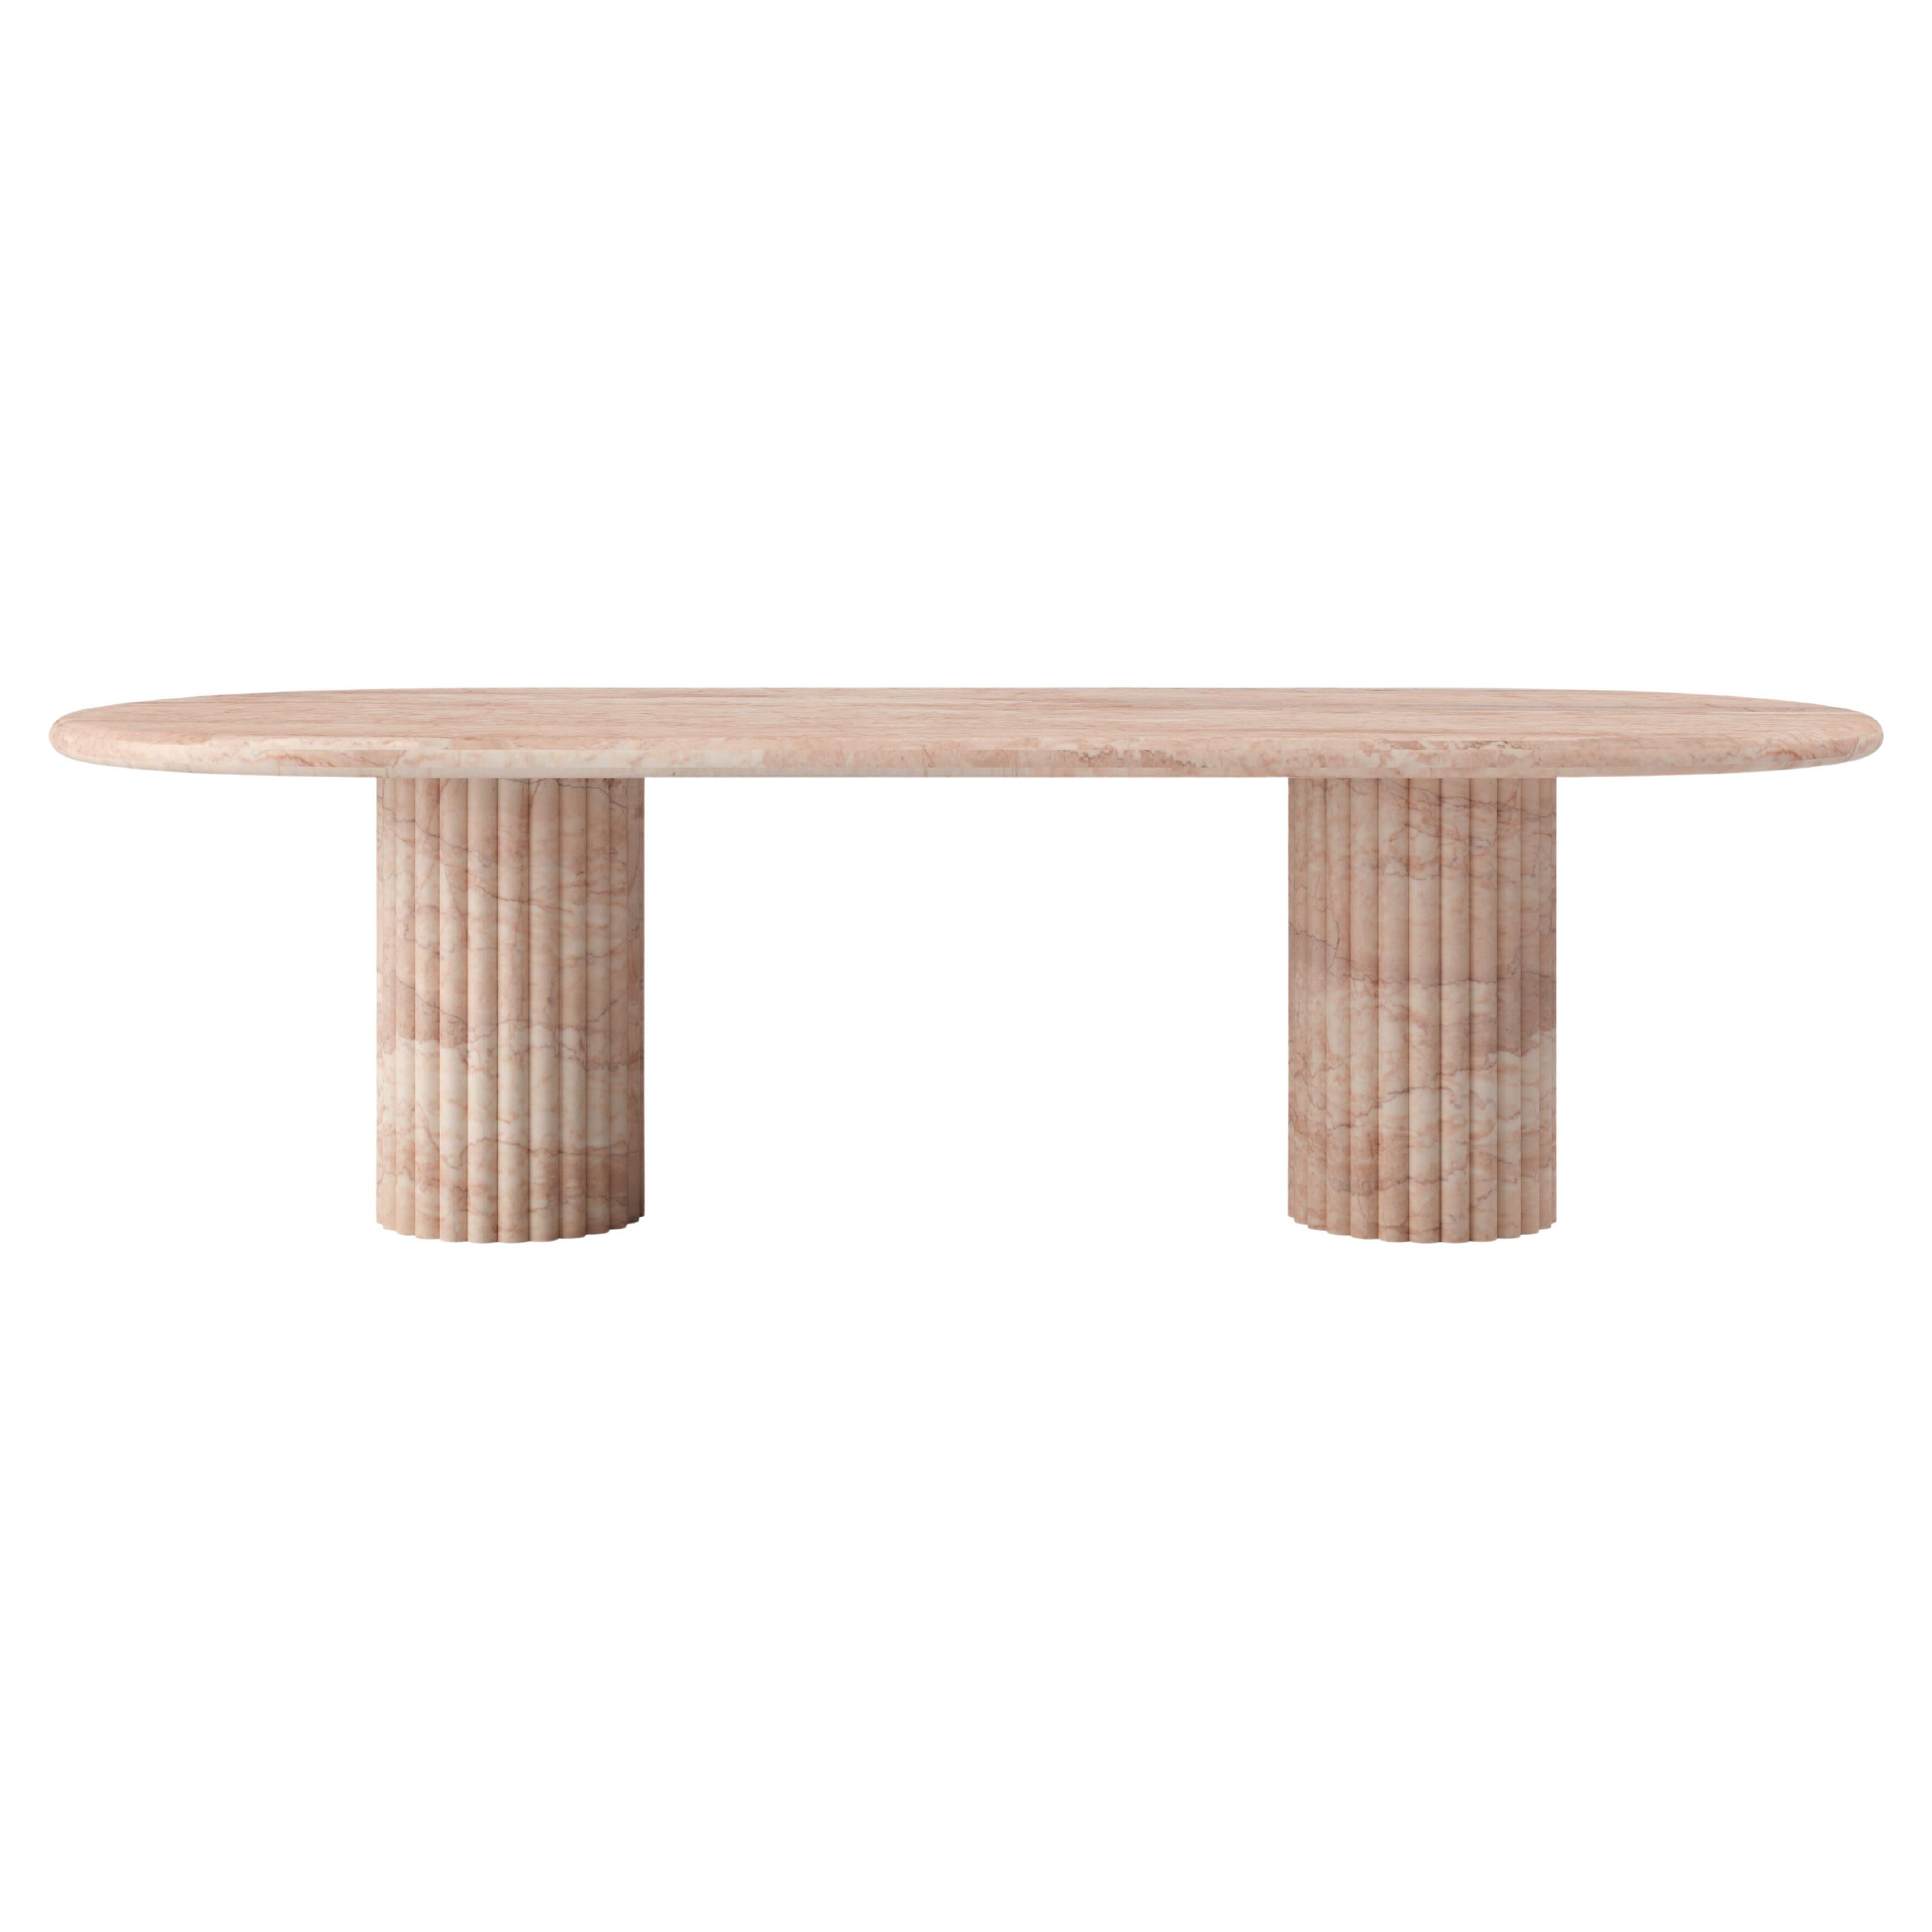 FORM(LA) Fluta Oval Dining Table 118”L x 48”W x 30”H Rosa Crema Marble